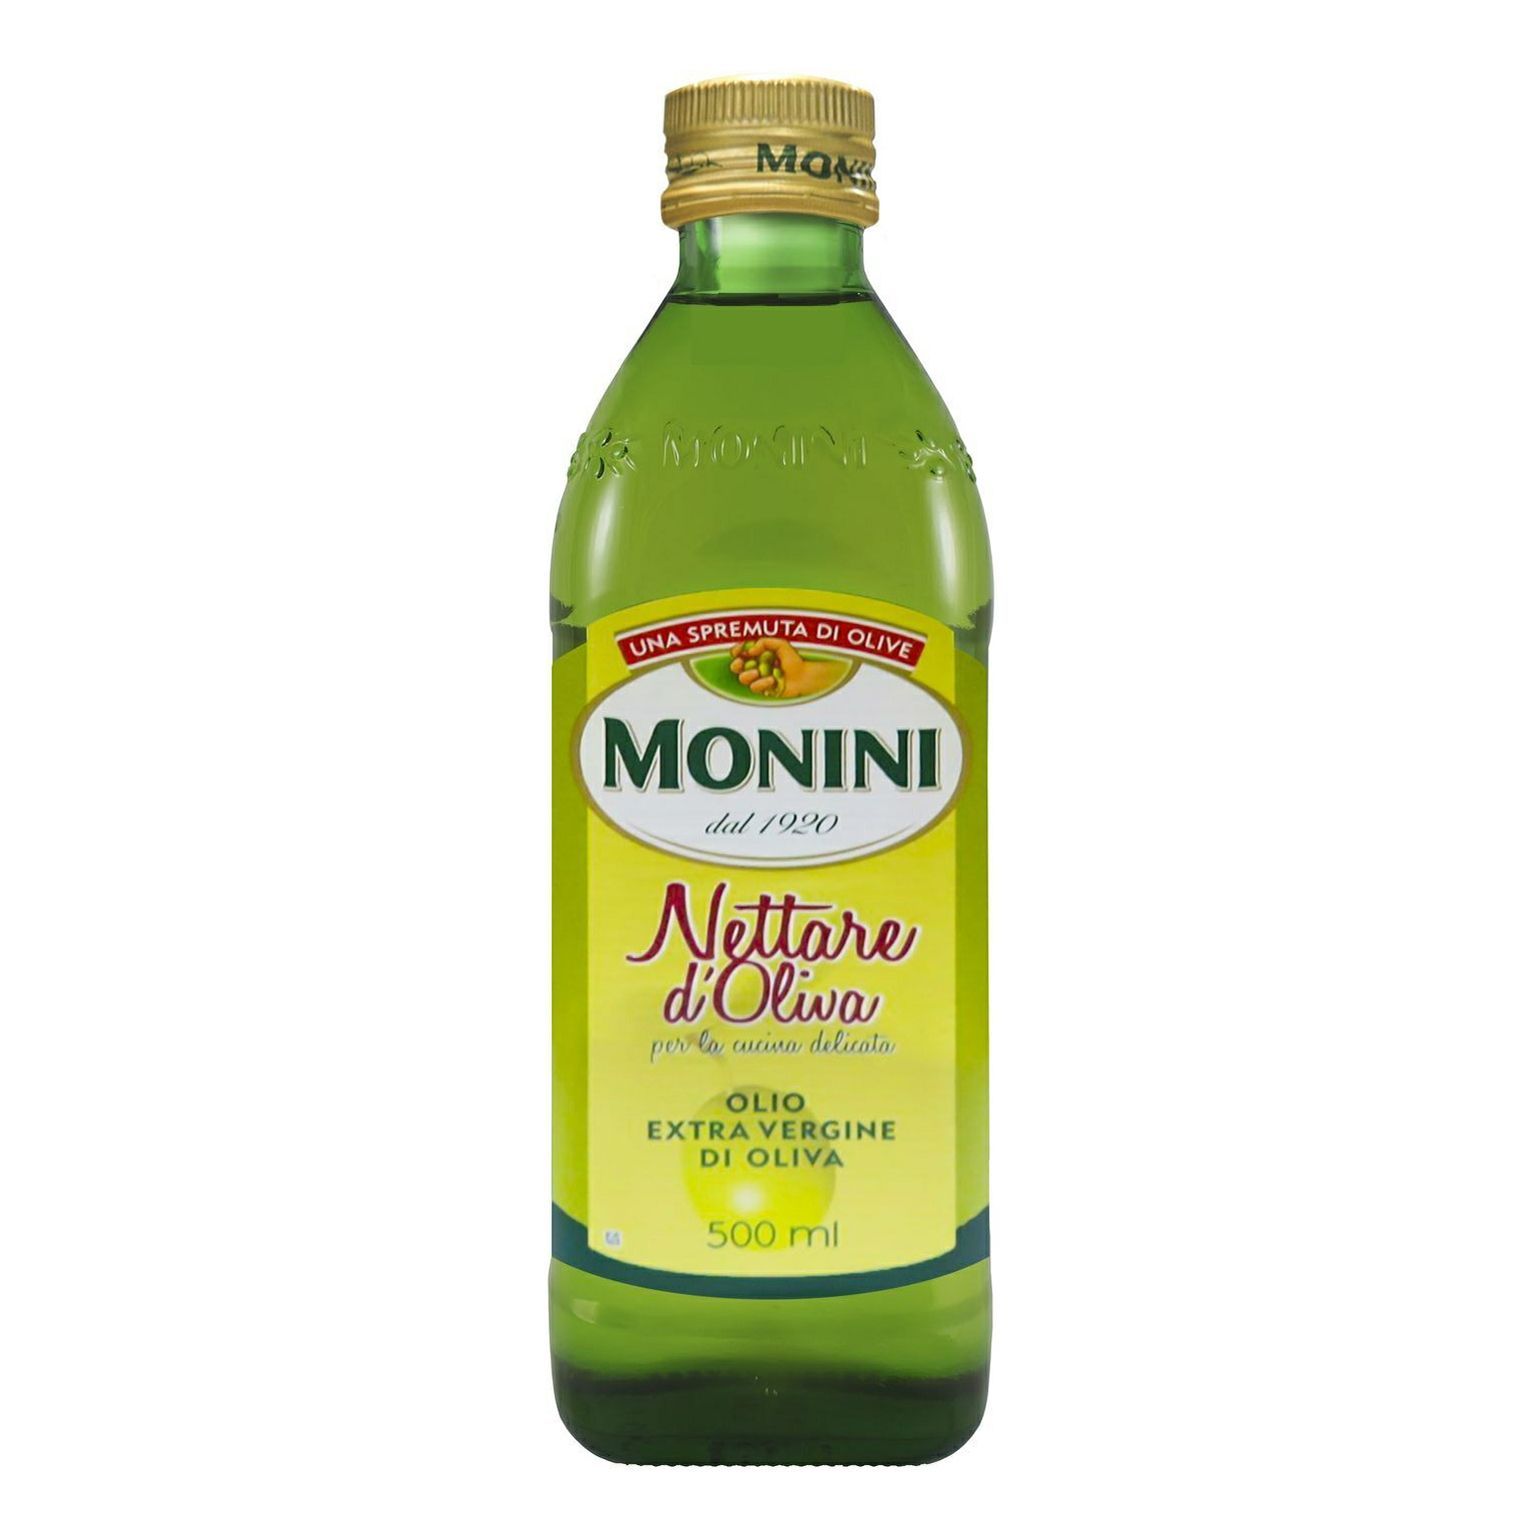 Масло оливковое monini купить. Монини 500мл масло. Monini оливковое масло 500. Оливковое масло Монини Классик 500 мл. Масло оливковое Monini высшего качества д/жарки стекло 1л.